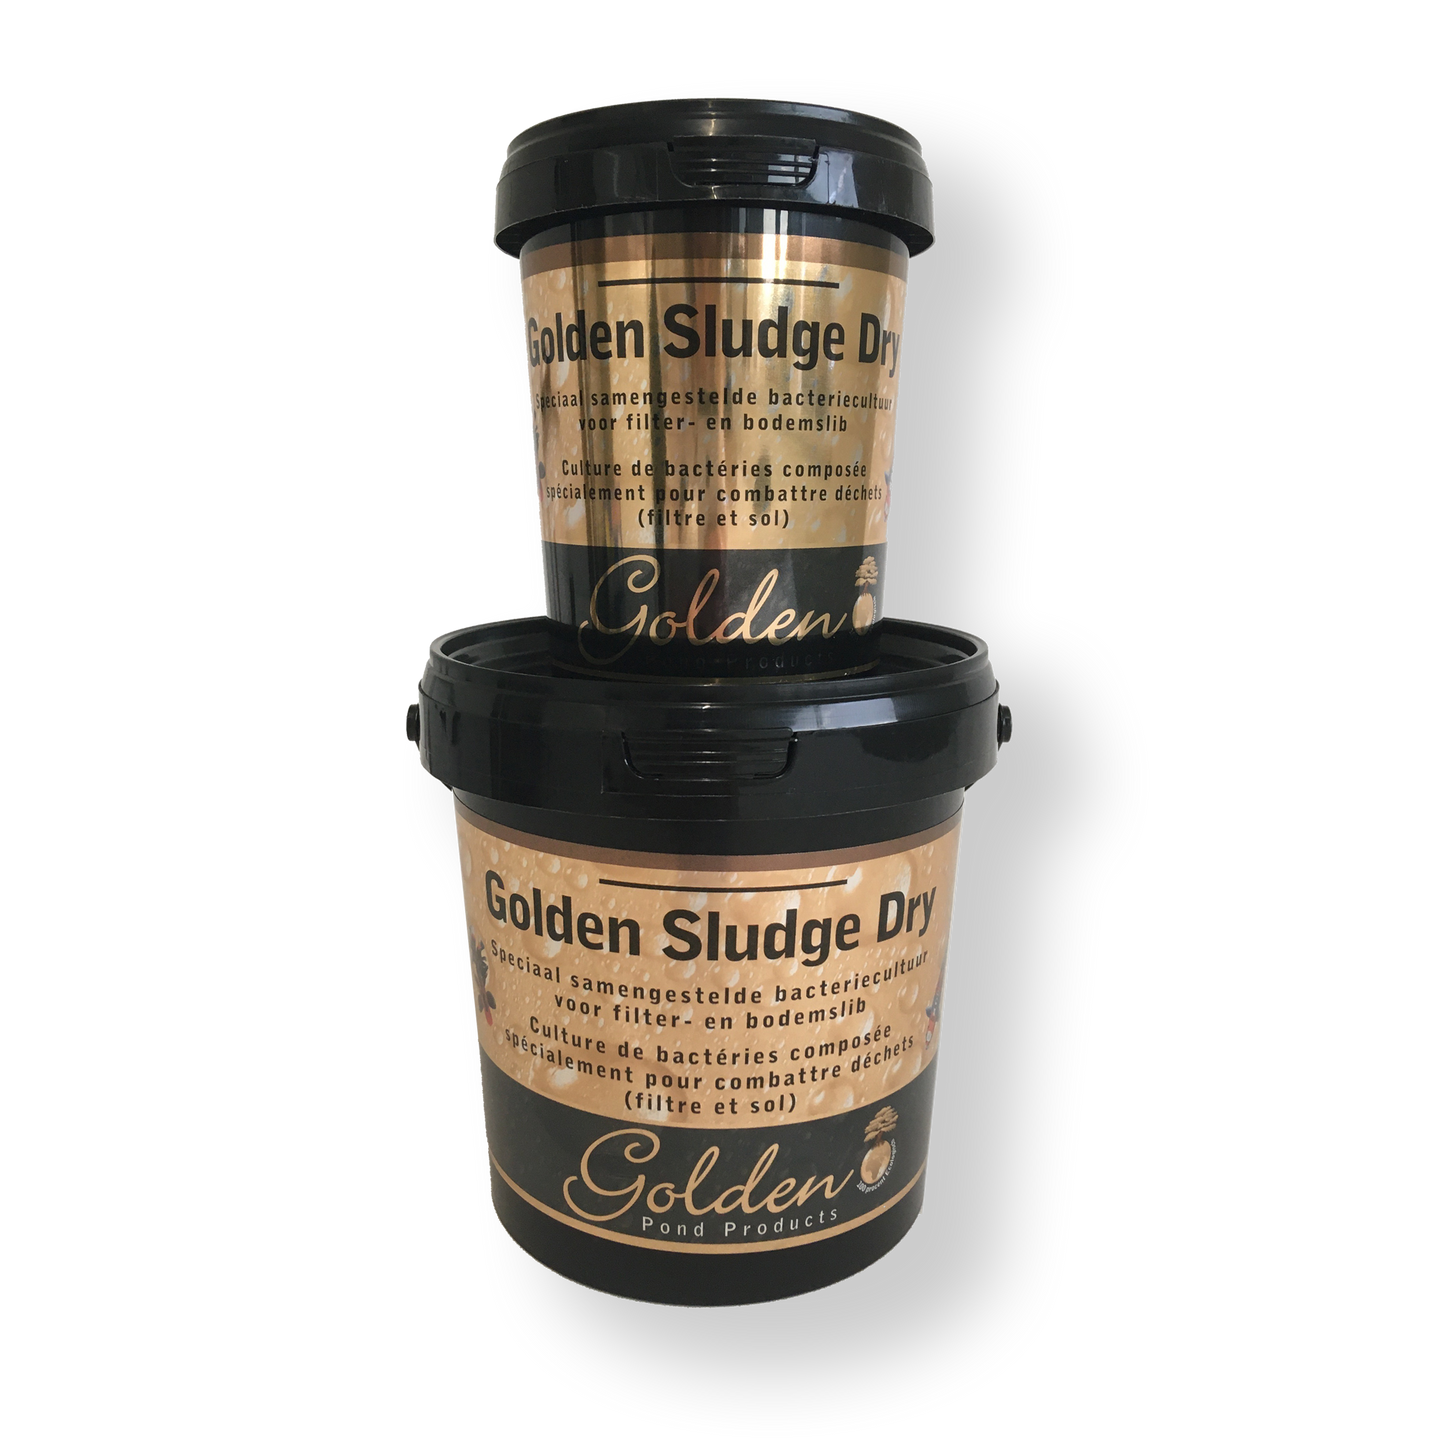 Golden Sludge Dry